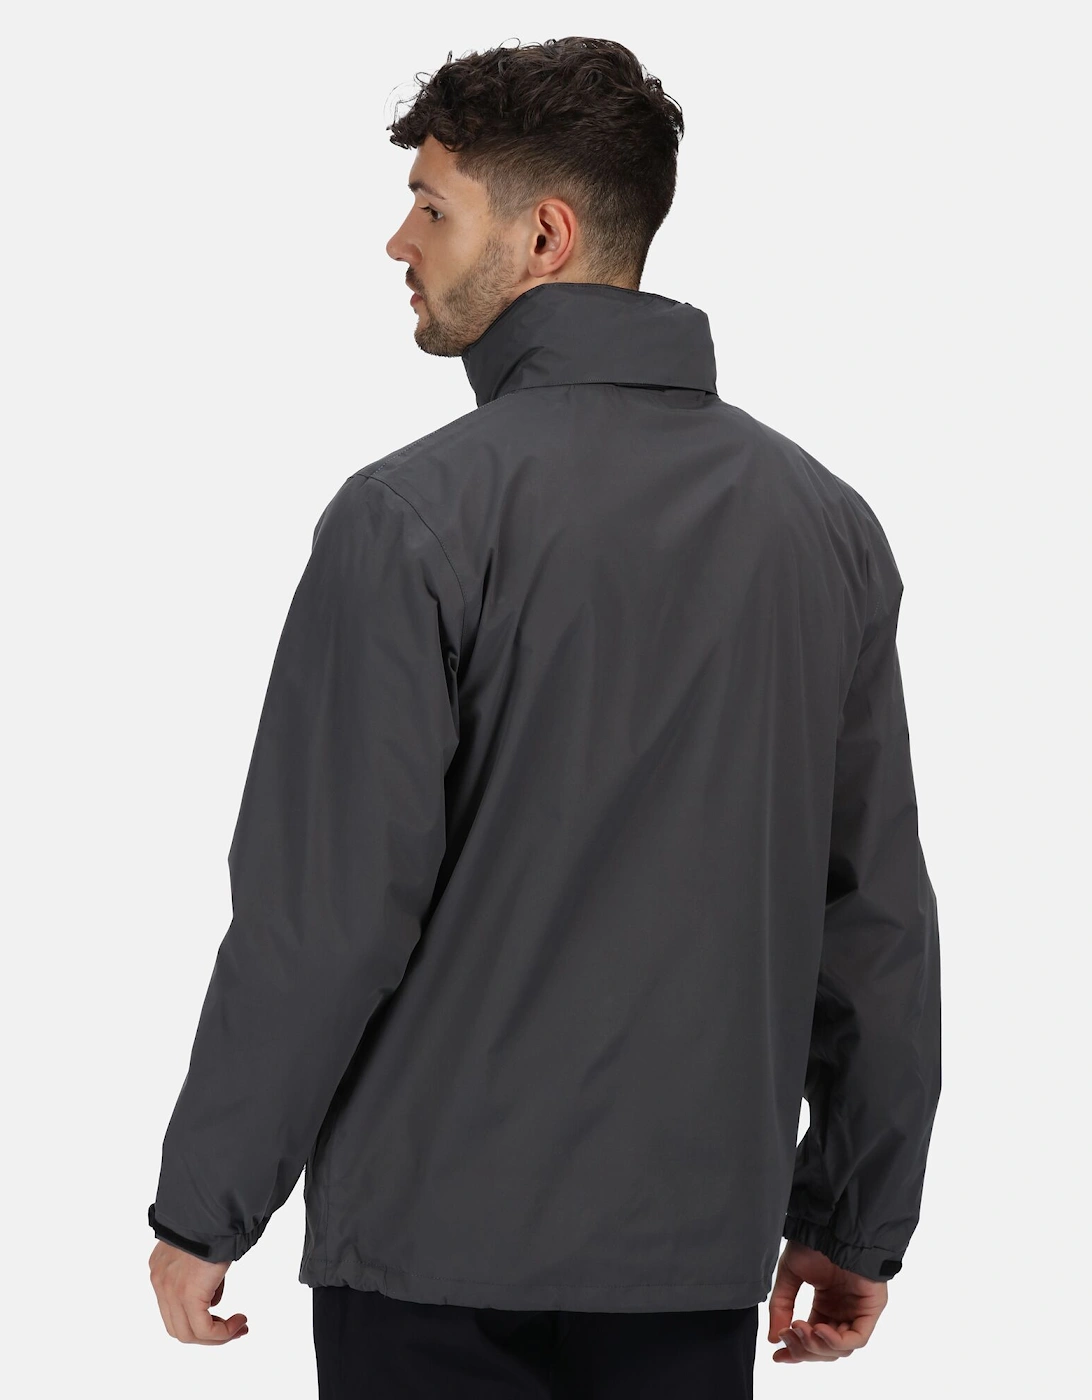 Mens Standout Ardmore Jacket (Waterproof & Windproof)